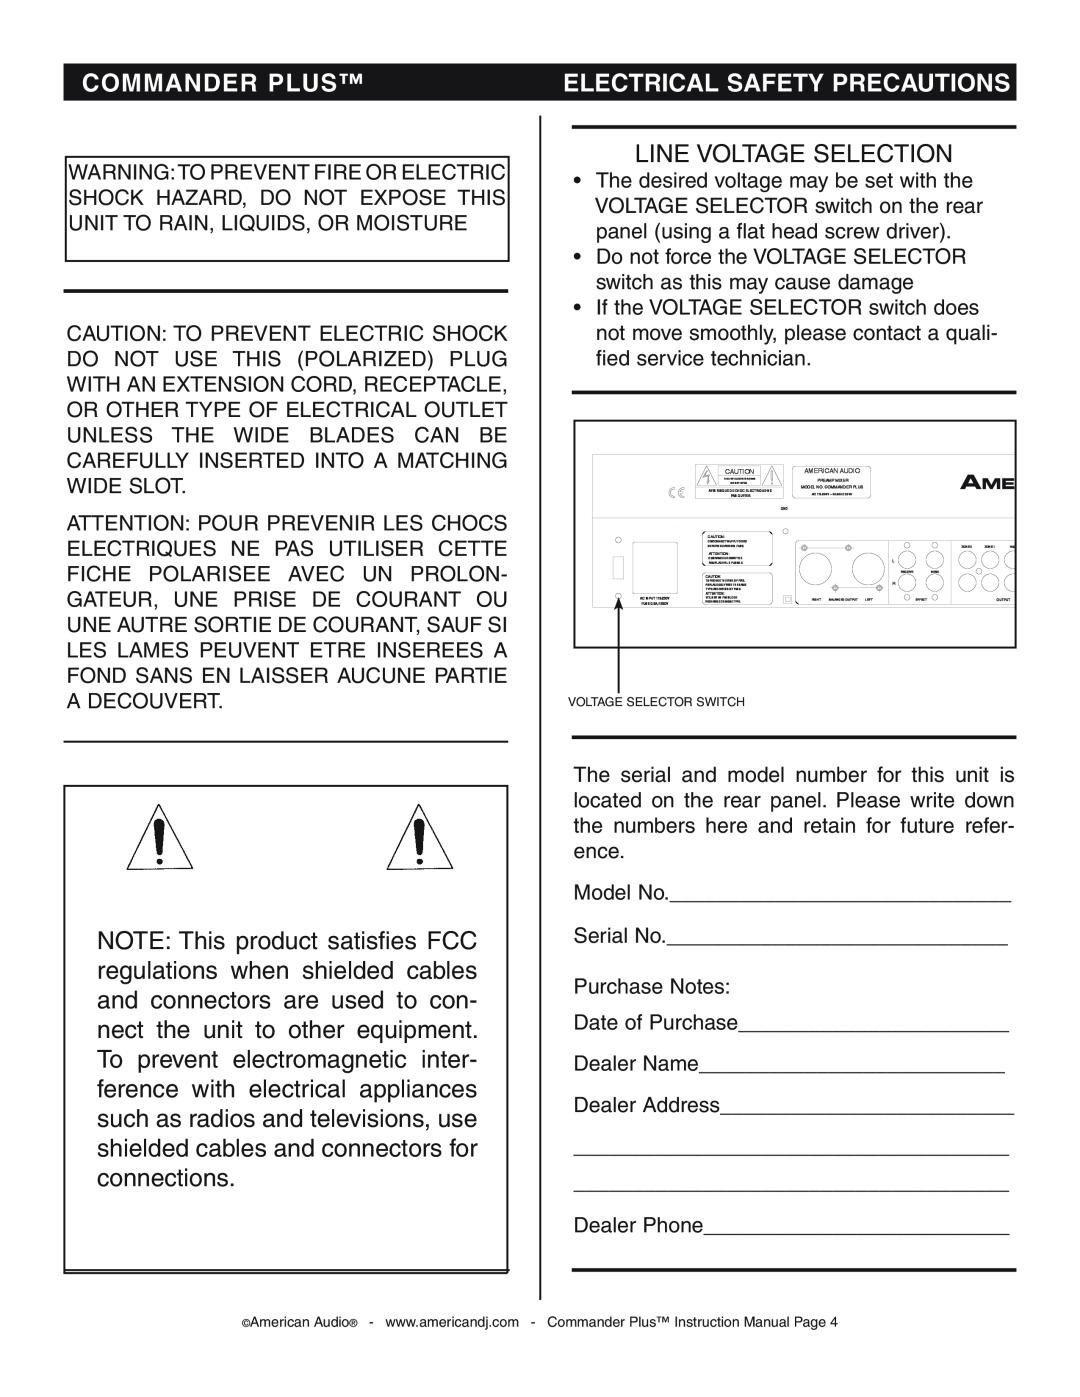 American Audio CommanderPlus manual Electrical Safety Precautions, Line Voltage Selection, Commander Plus 